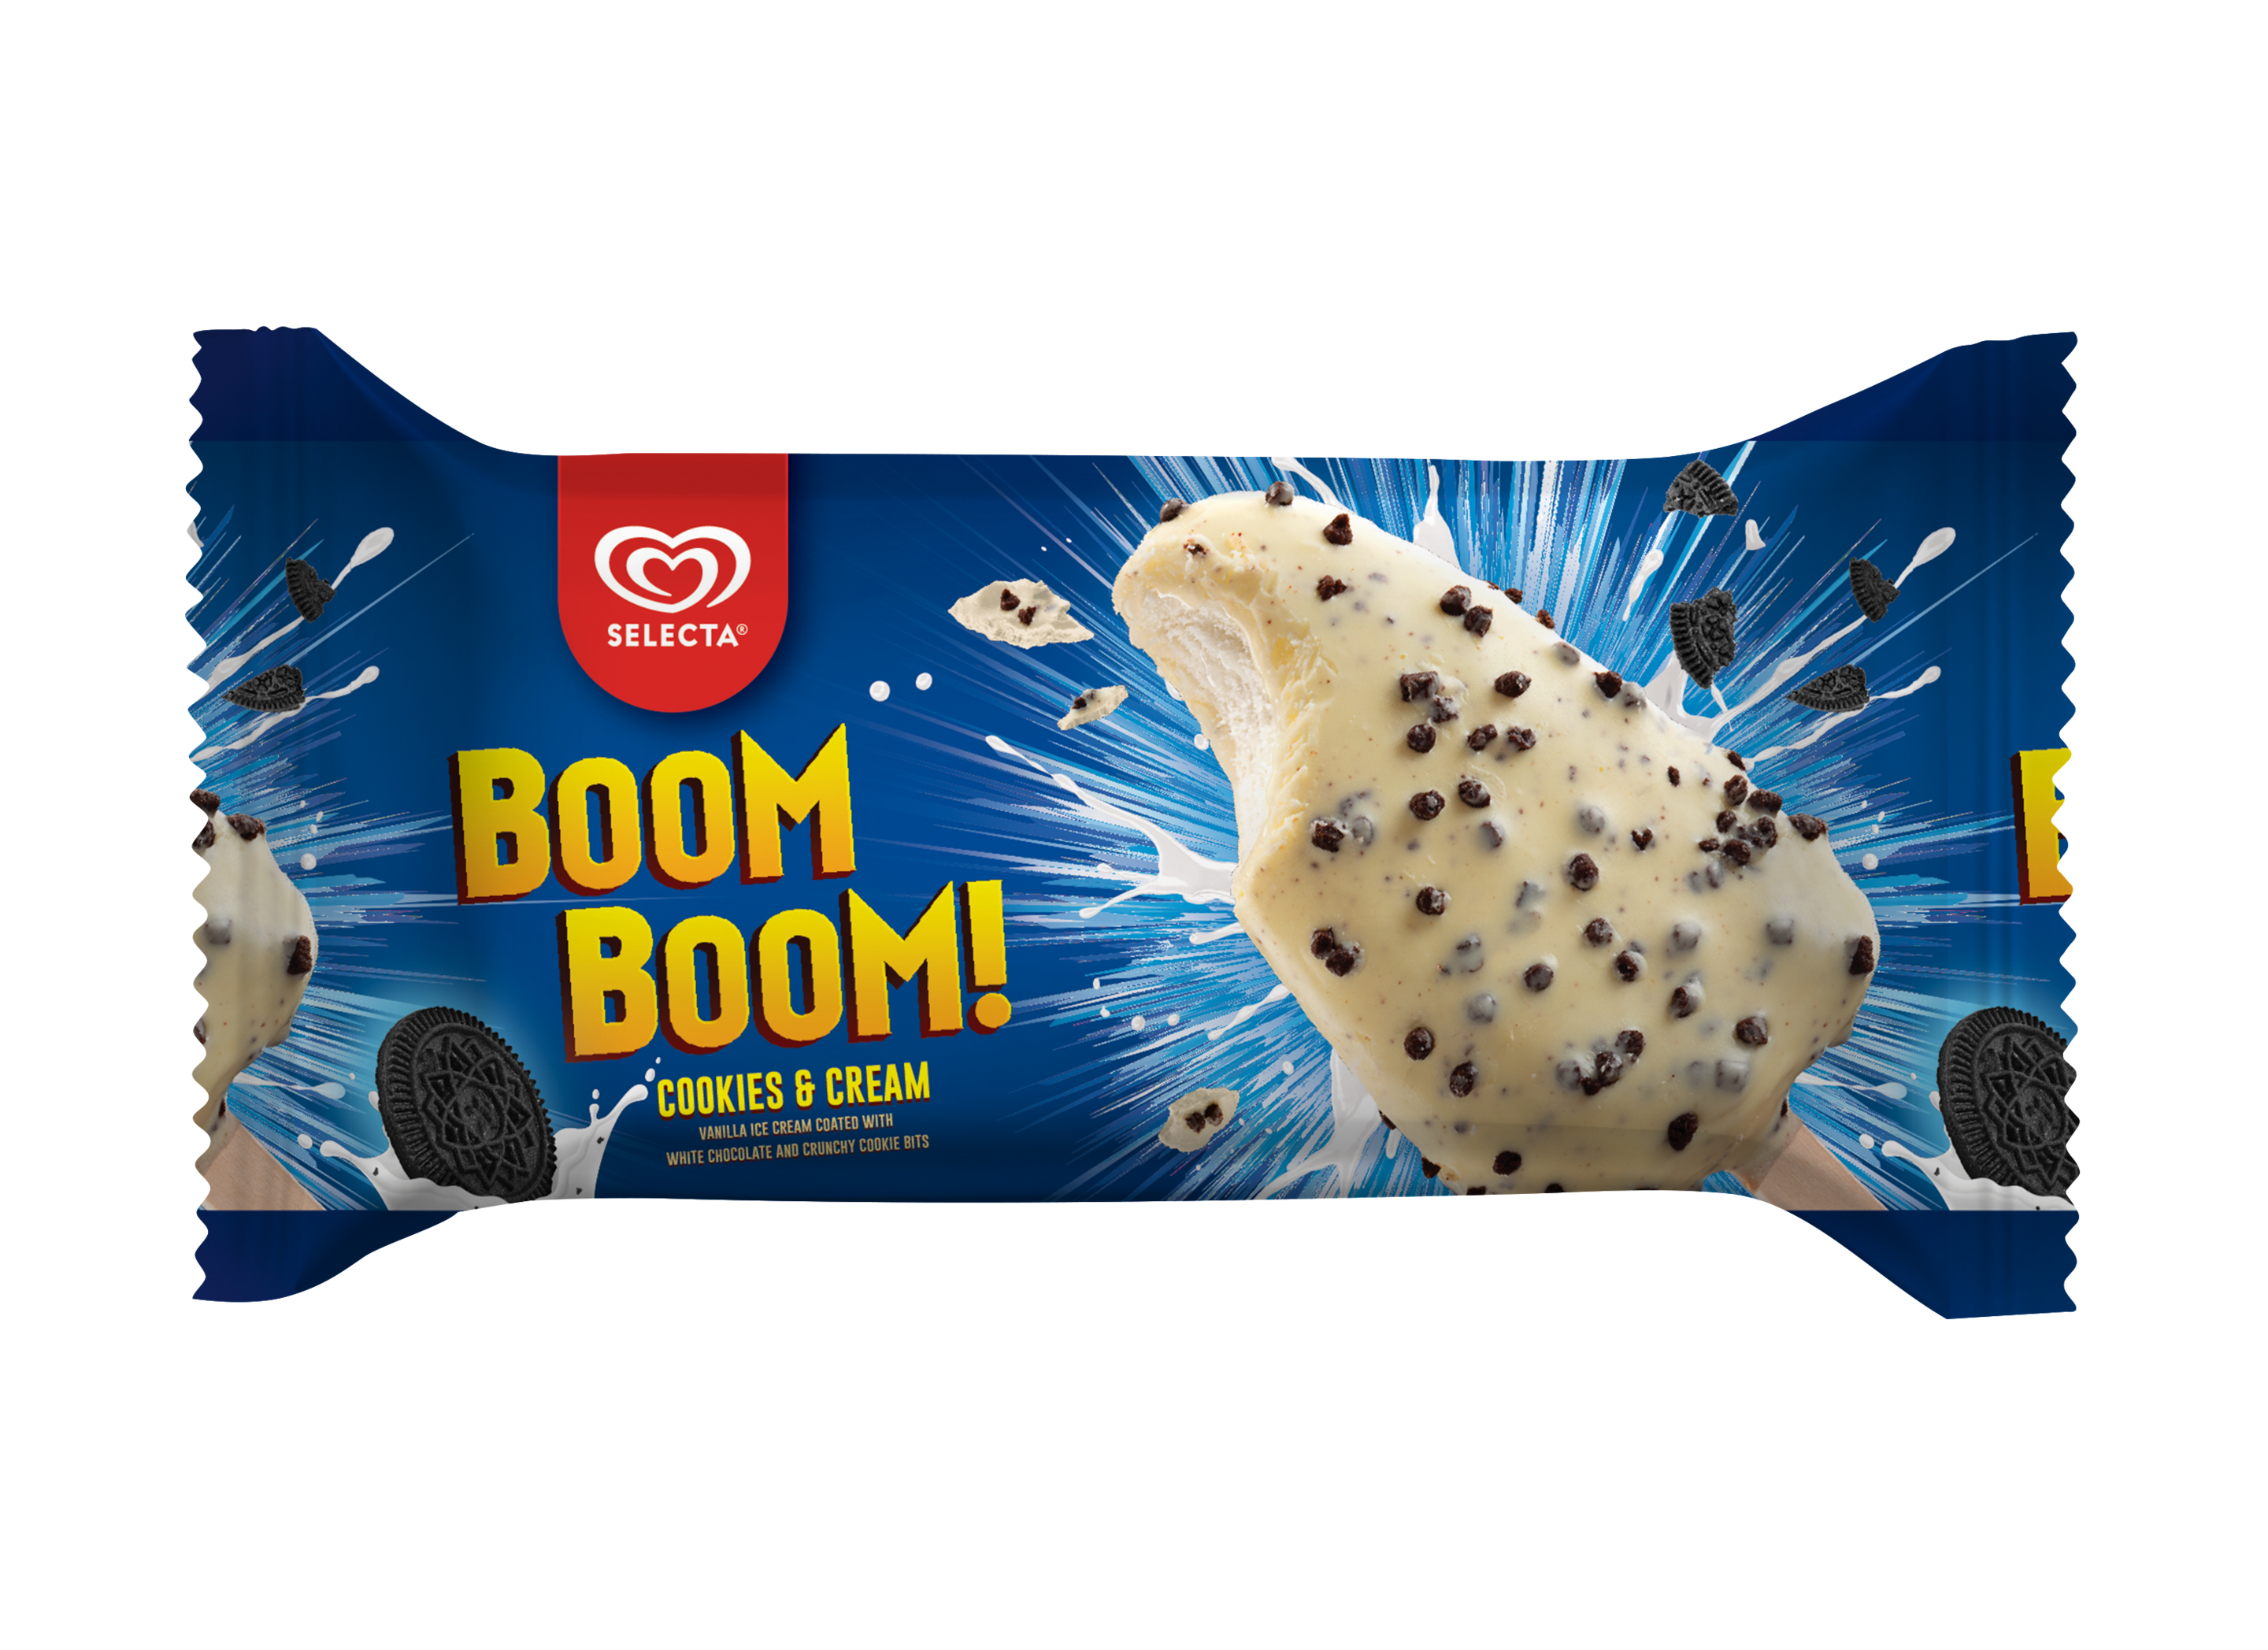 Selecta Boom boom Pinipig Cookies & Cream Ice Cream Stick